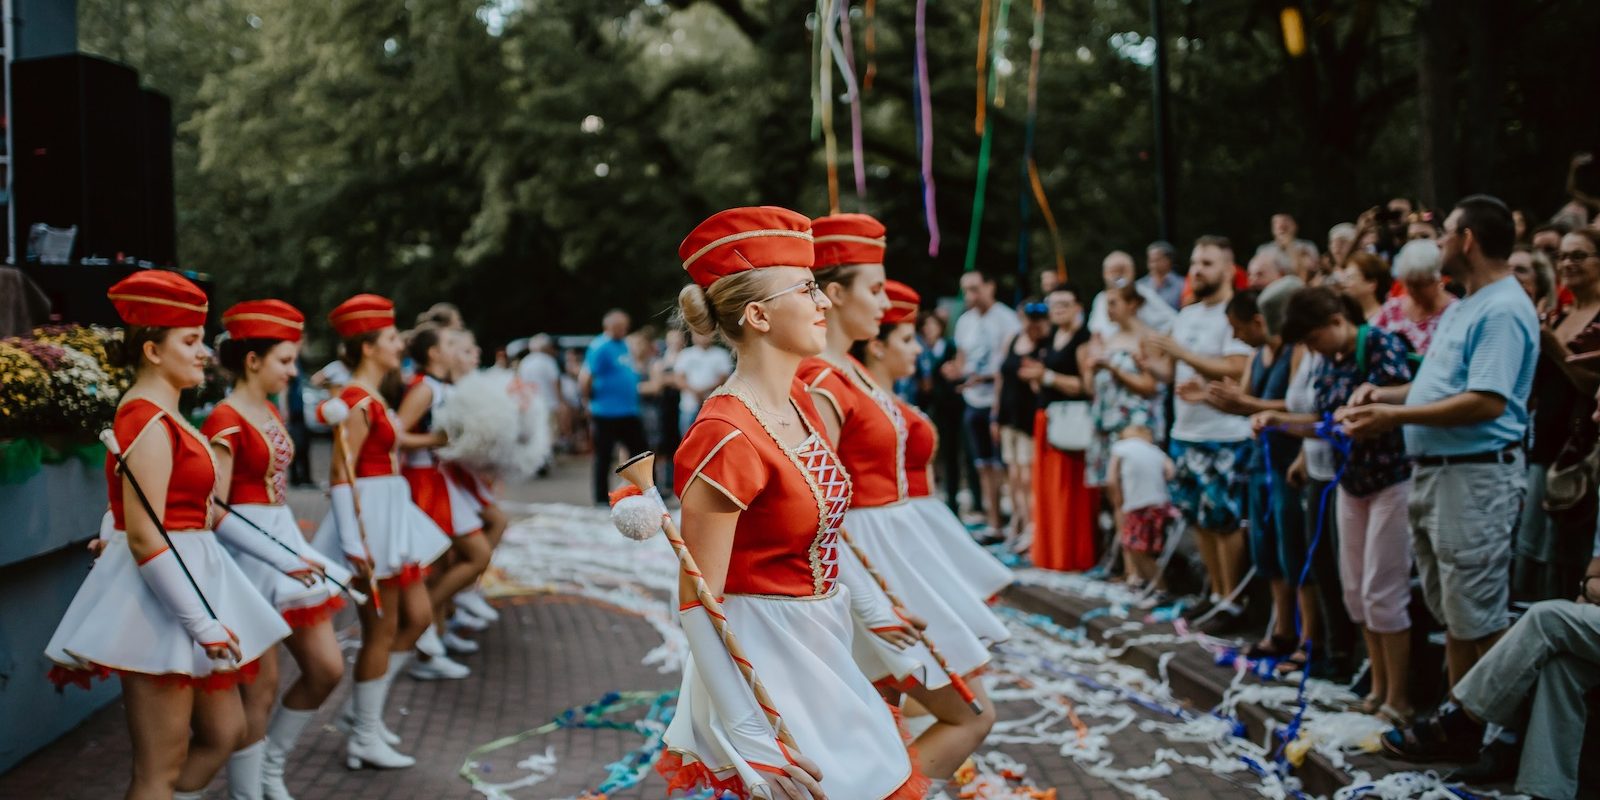 Festiwal orkiestr we Wrześni 2019